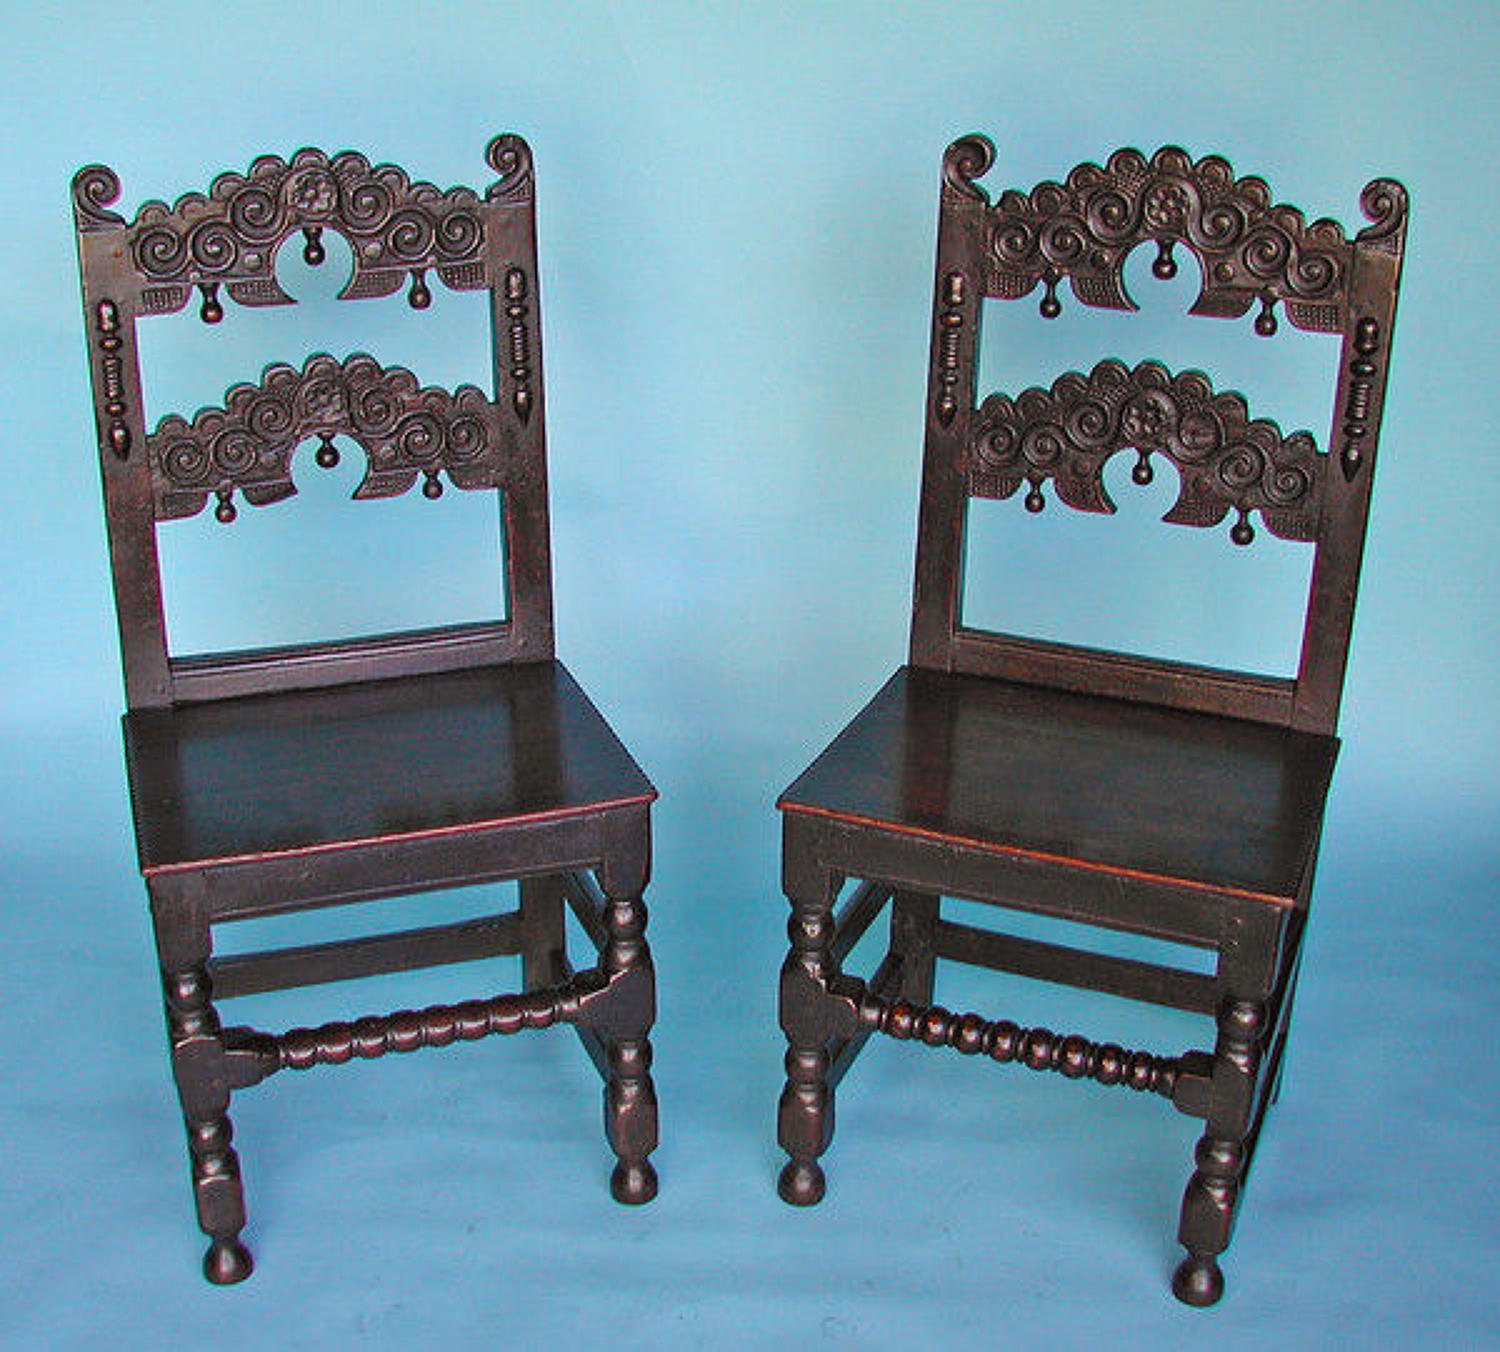 A pair of Antique 17thc Oak Derbyshire Chairs. English. C1660-80